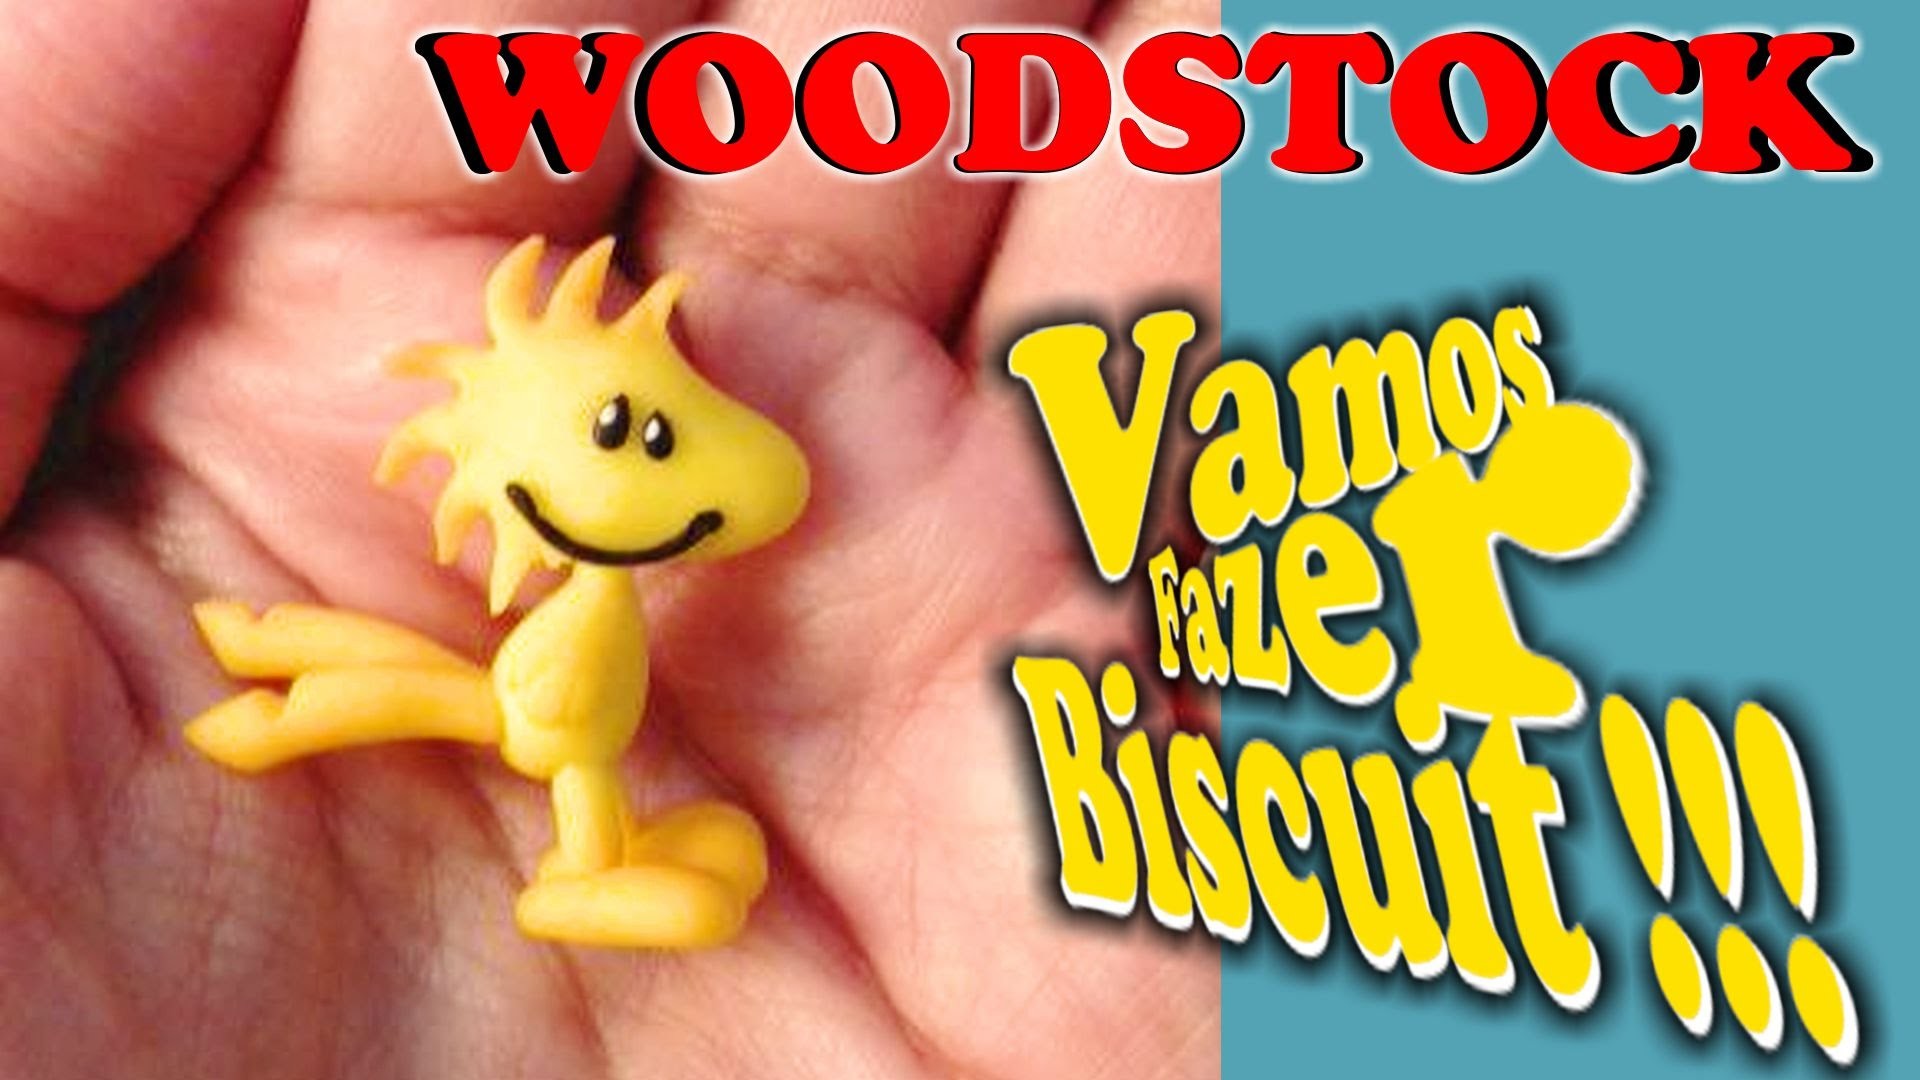 Woodstock, Biscuit - Ideia para lembrancinha.